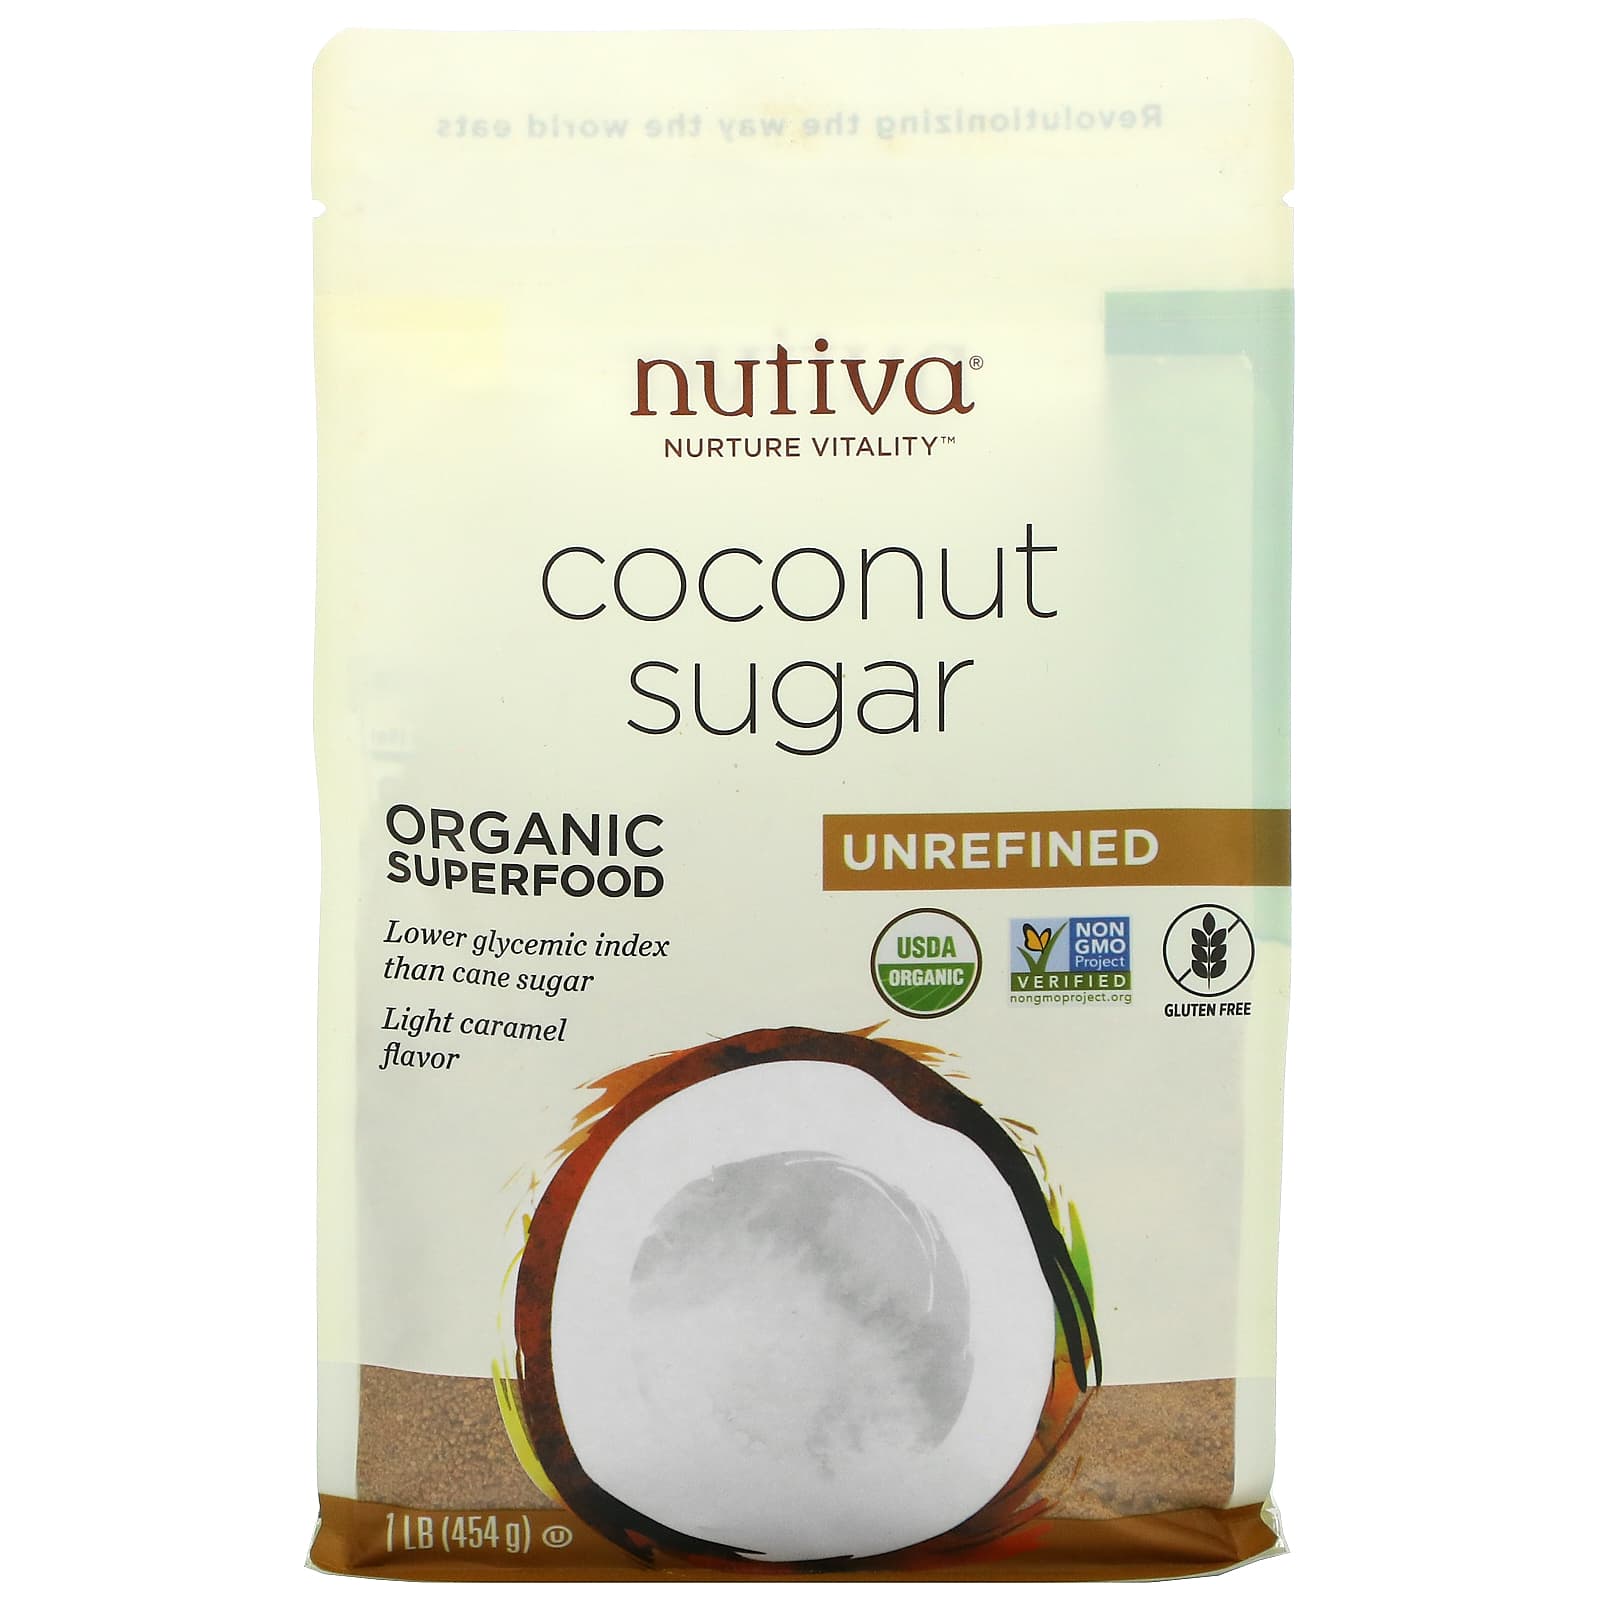 is coconut sugar gluten free